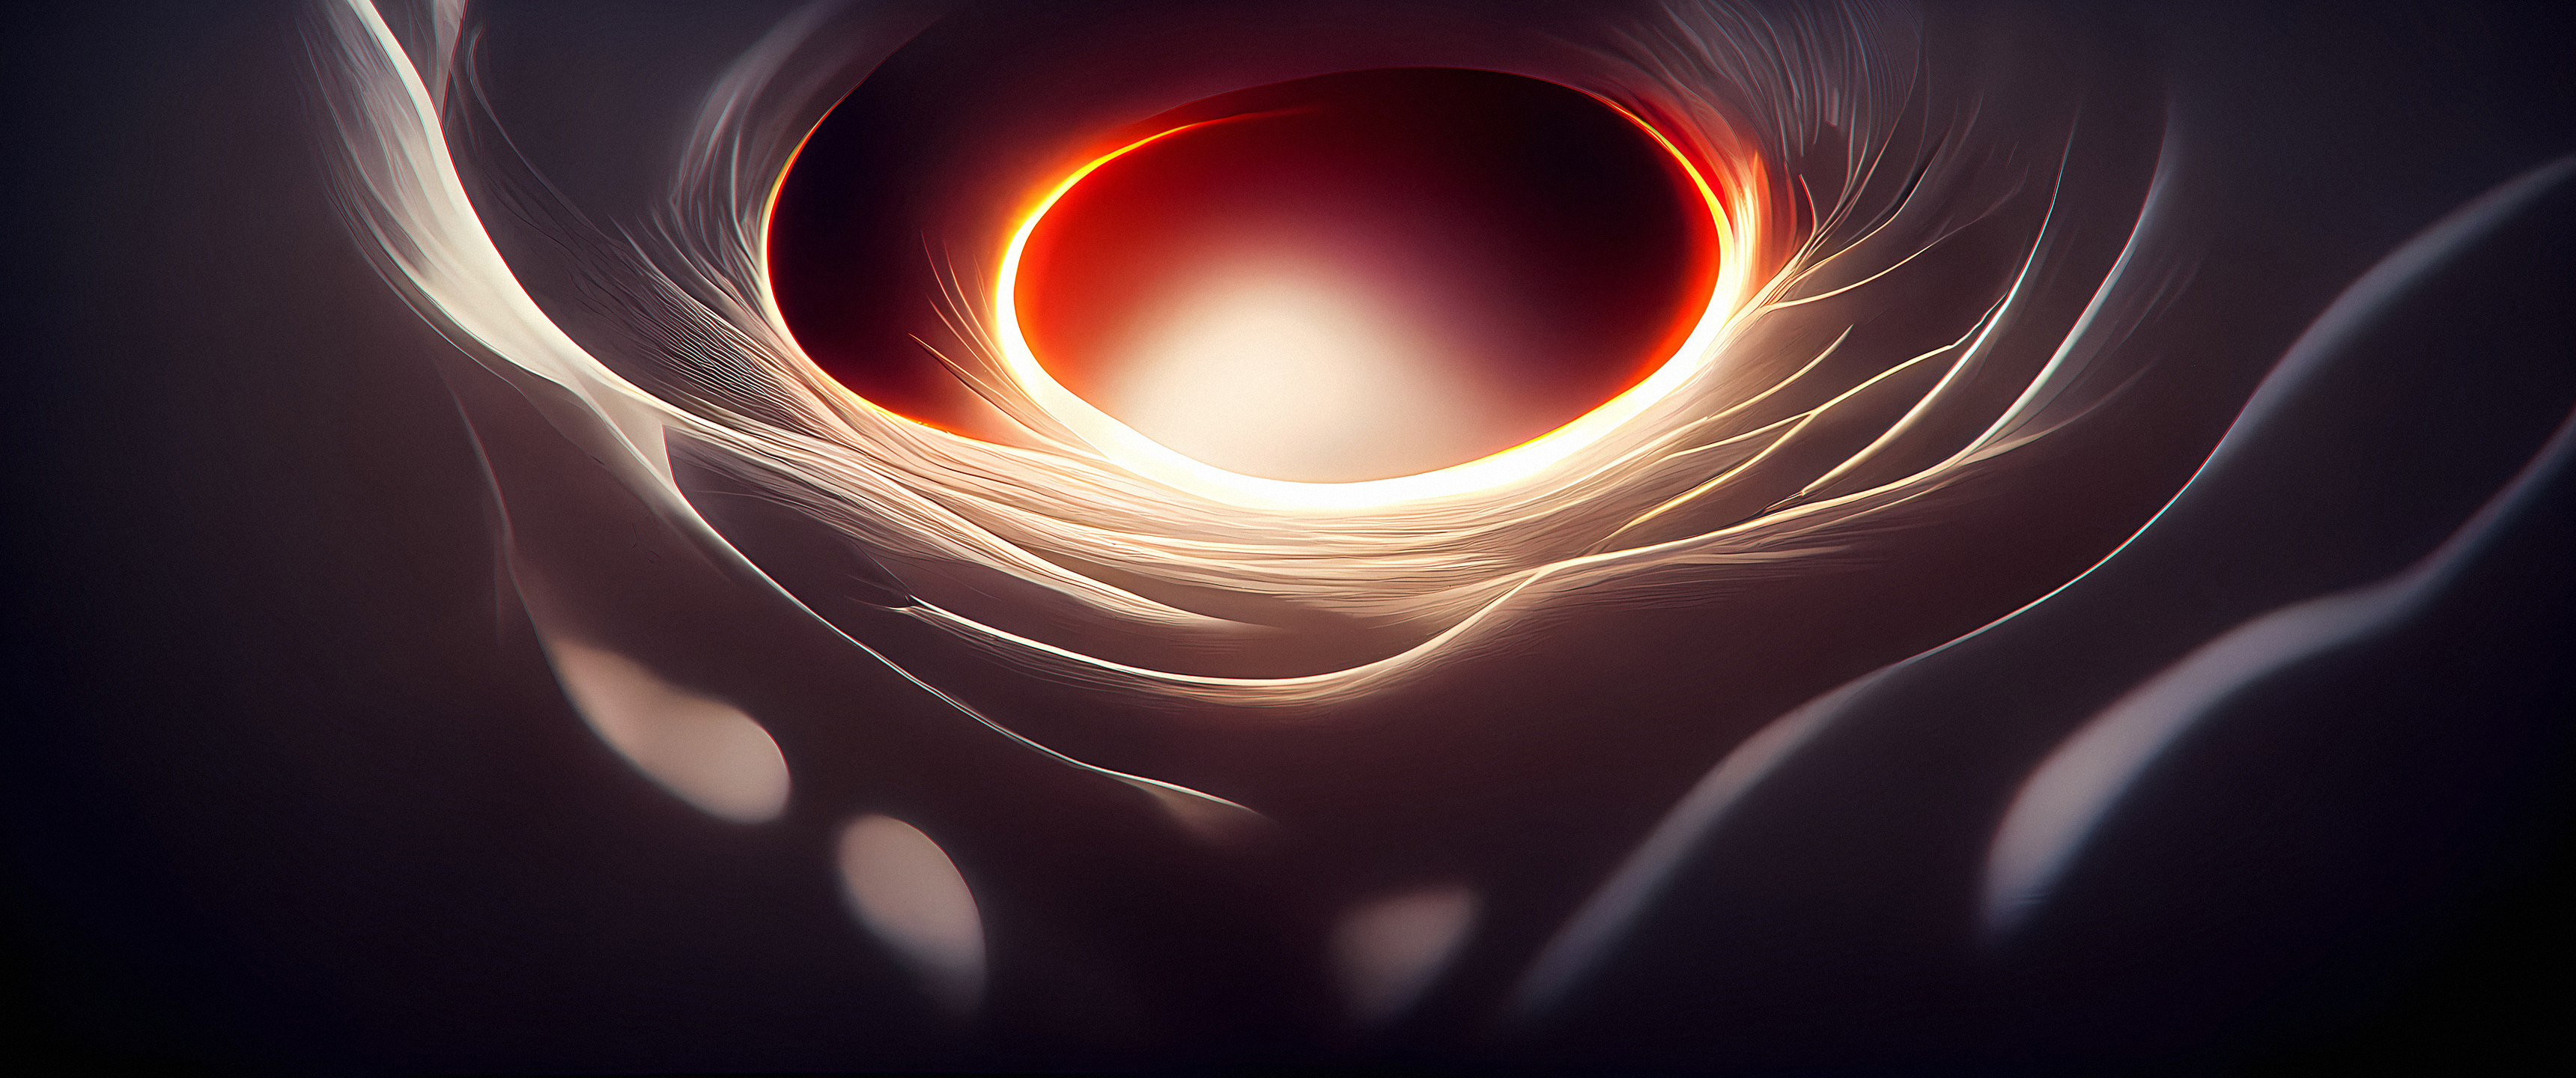 Ultrawide Artwork Event Horizon Black Holes Midjourney Ai Space Supermassive Black Hole Digital Art 3440x1440